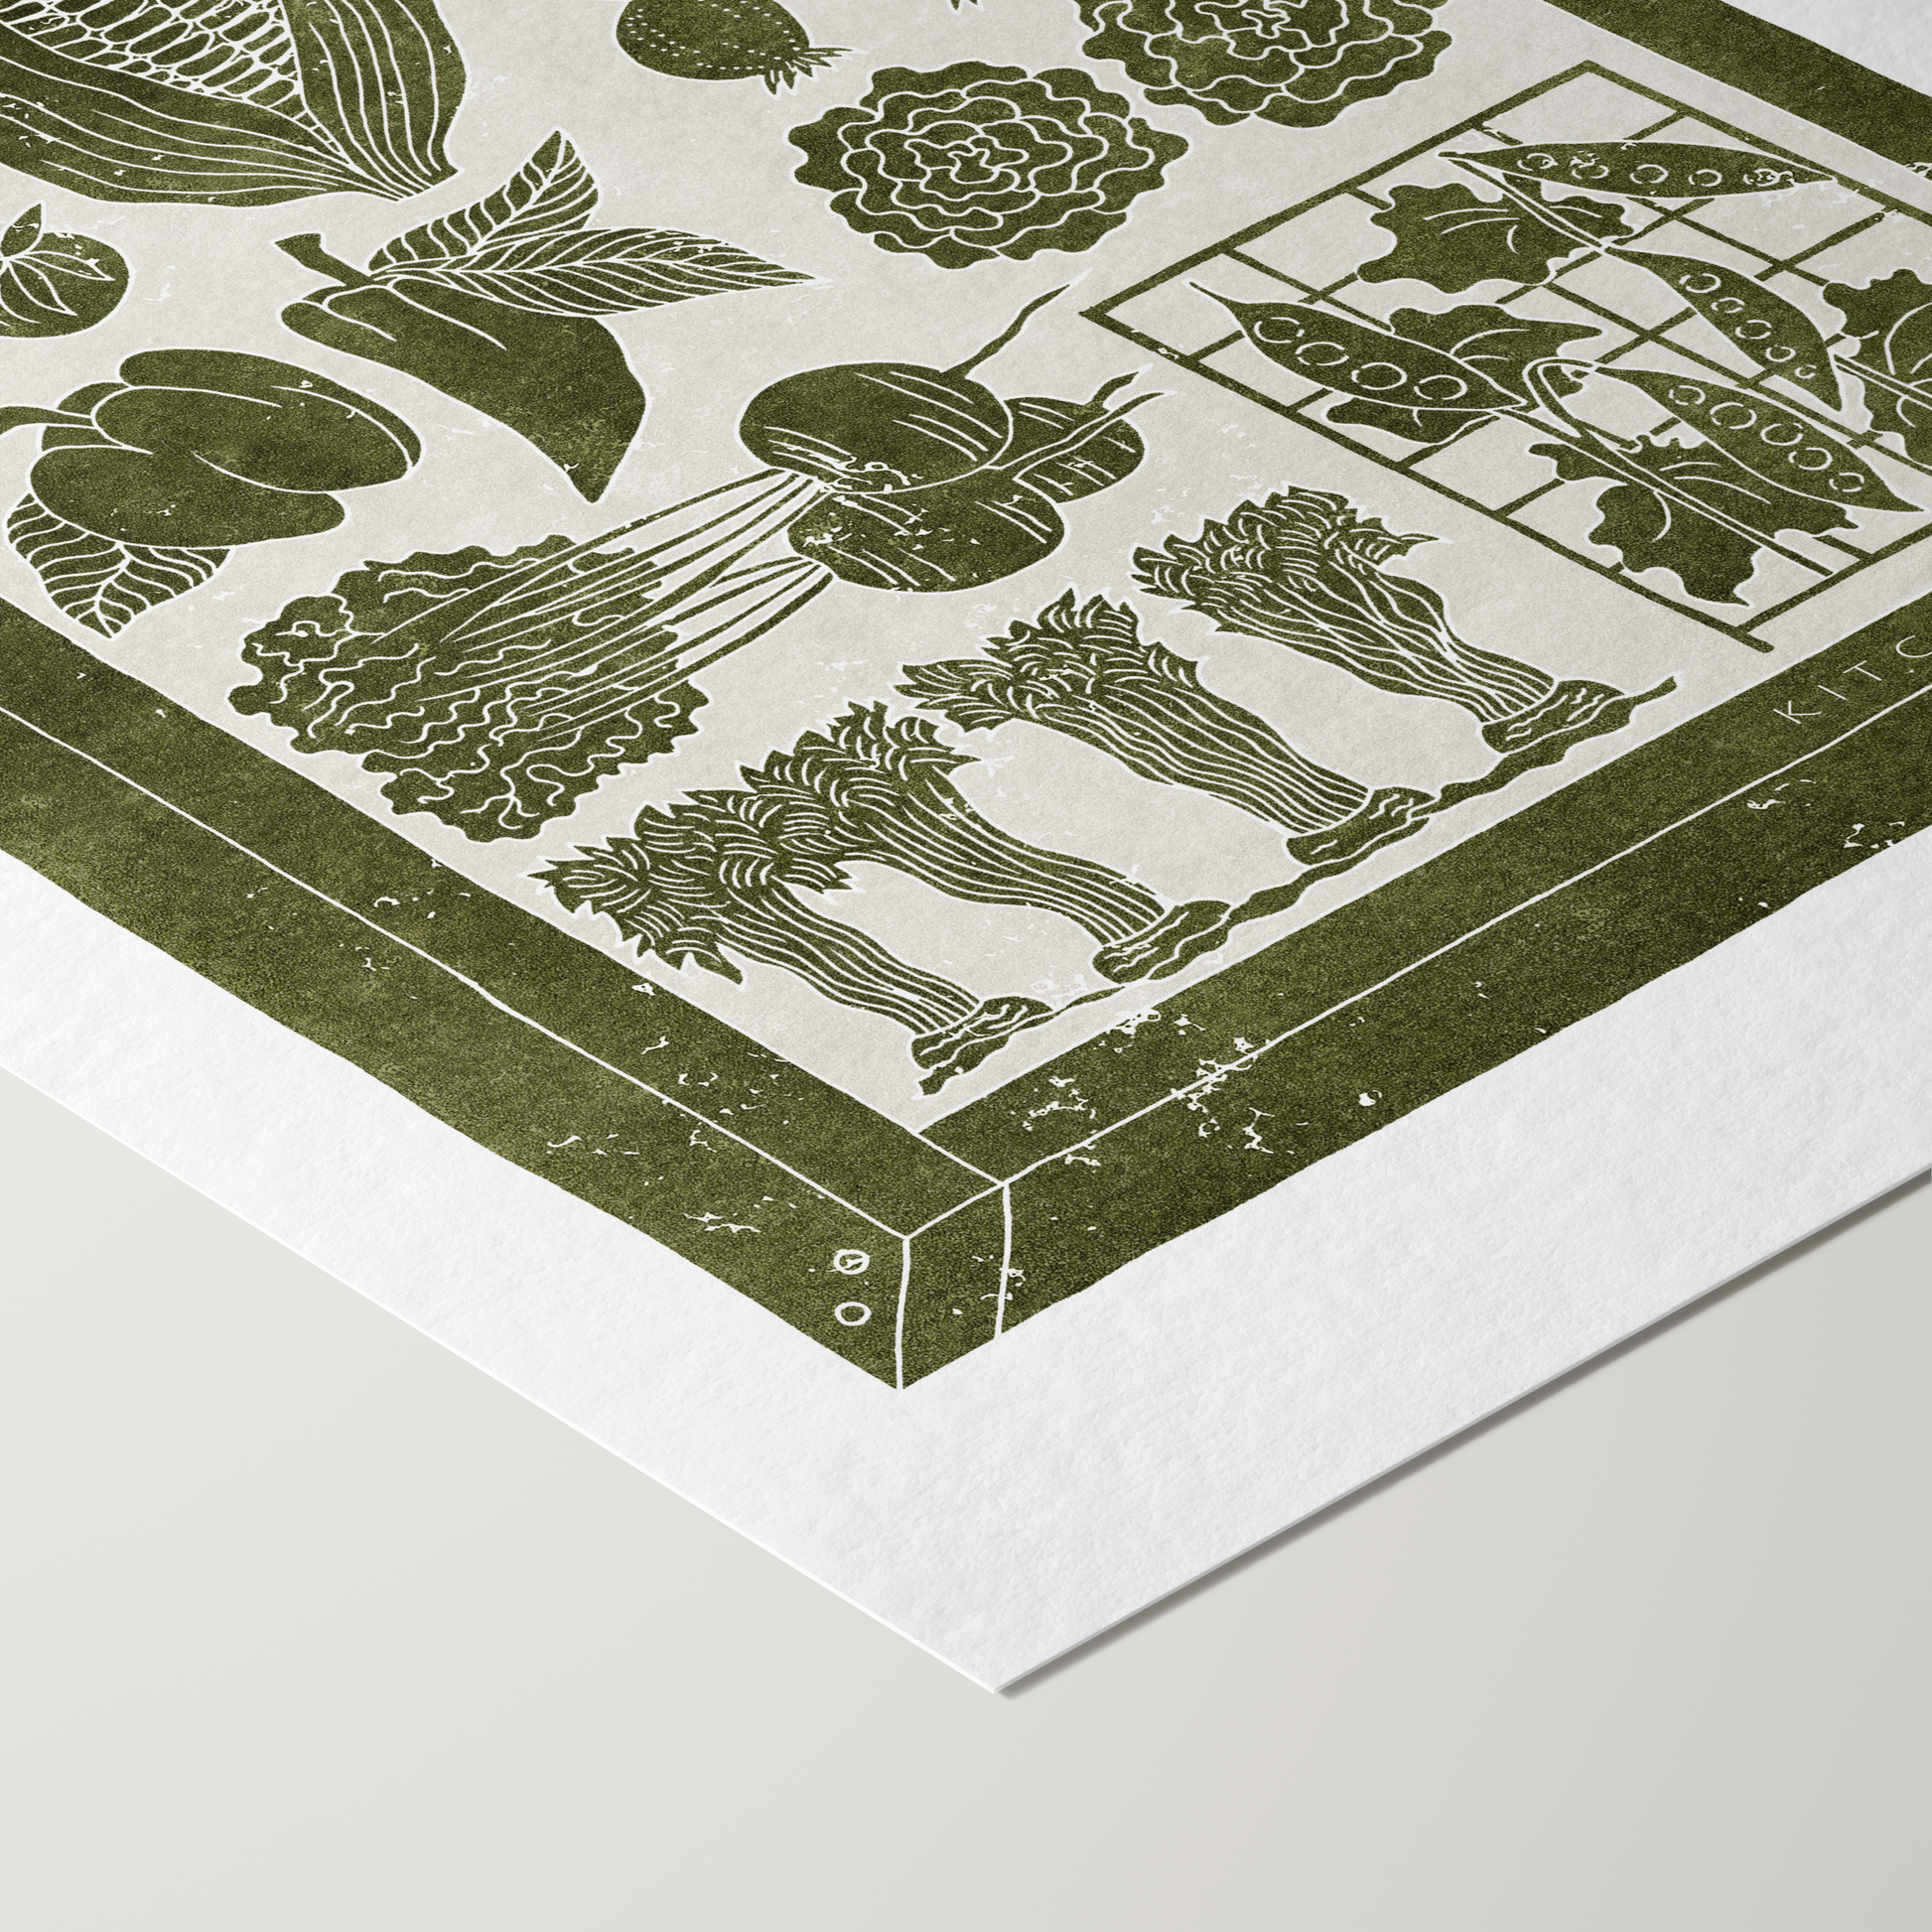 Home Decor Print - Nature-inspired Prints - Kitchen Garden - Framed - Linocut Effect Illustration - Green - Hahnemühle German Etching Paper - Close Up